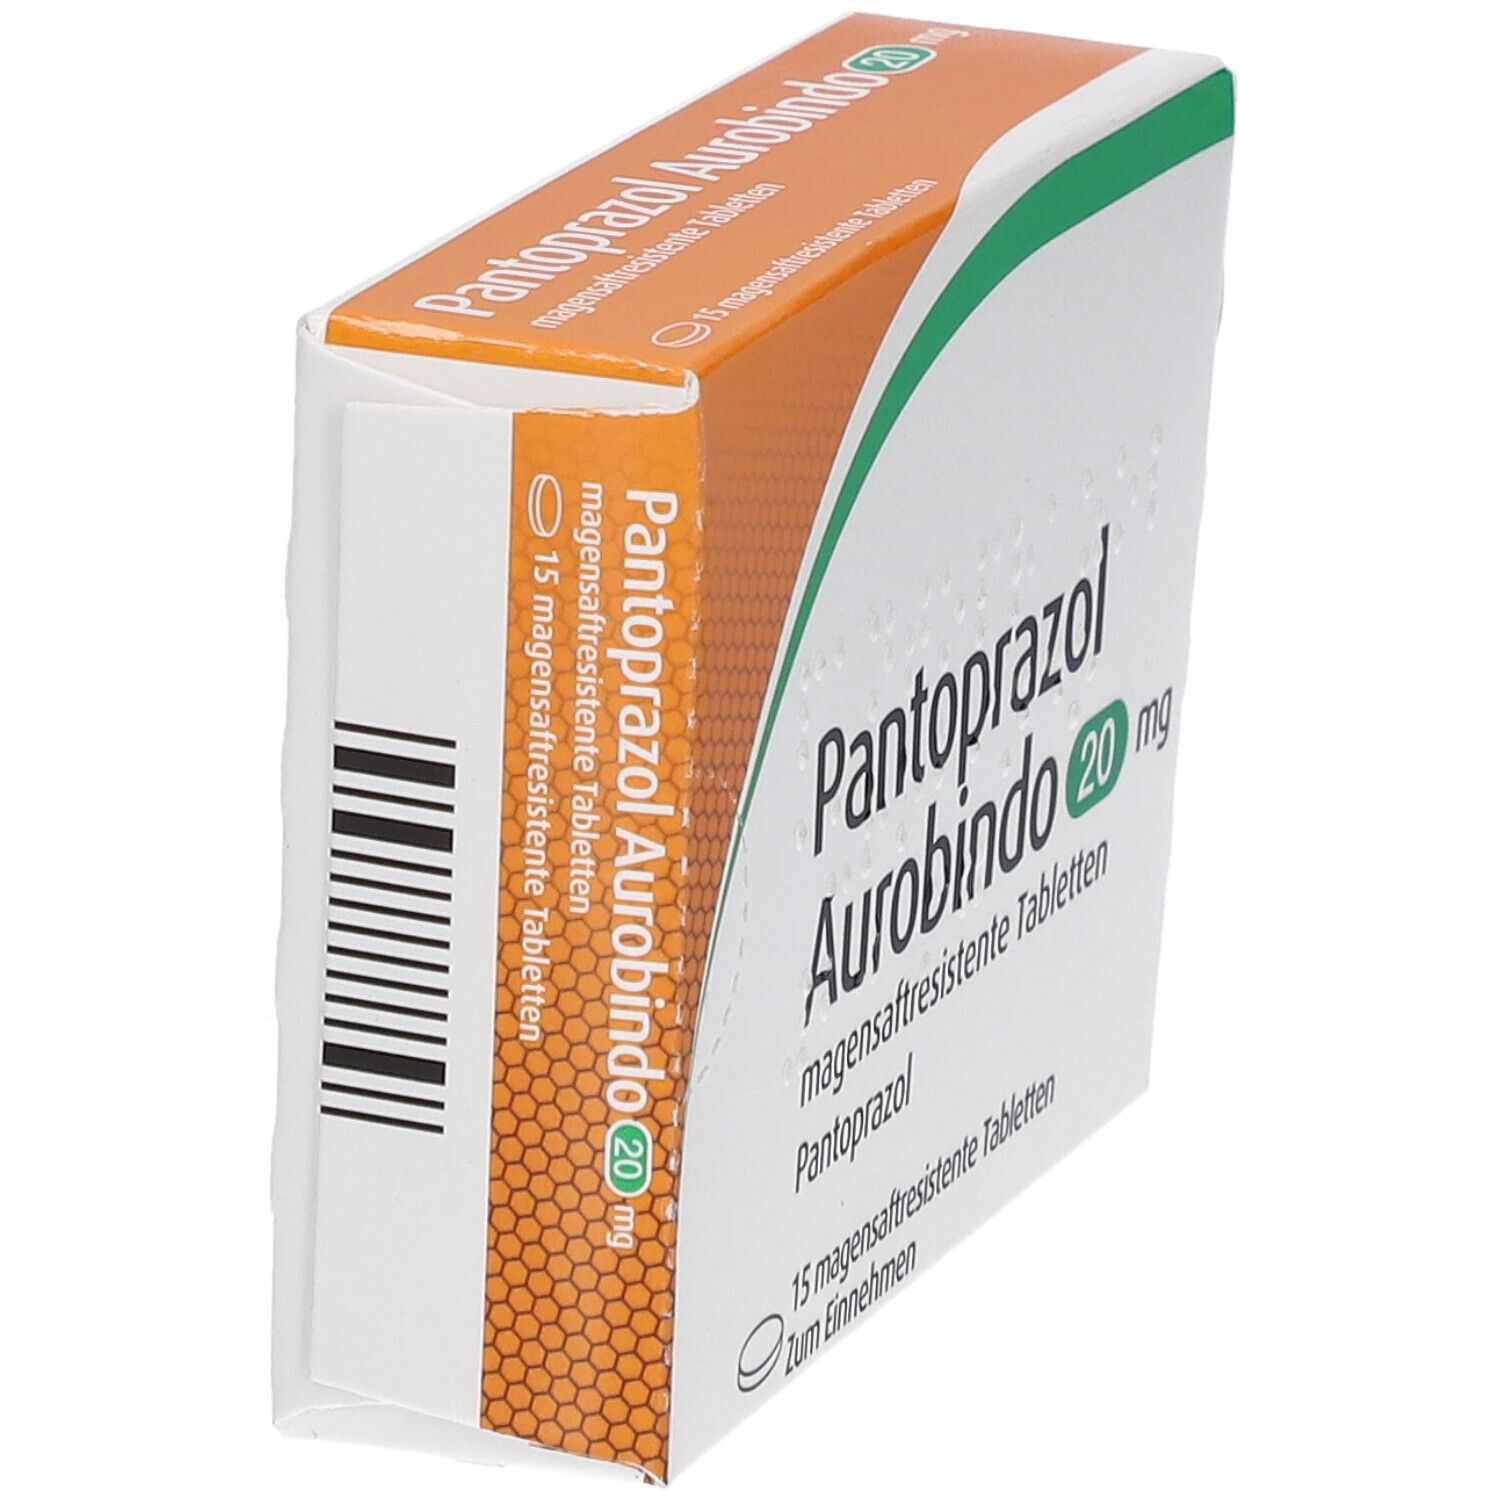 Pantoprazol Aurobindo 20 mg